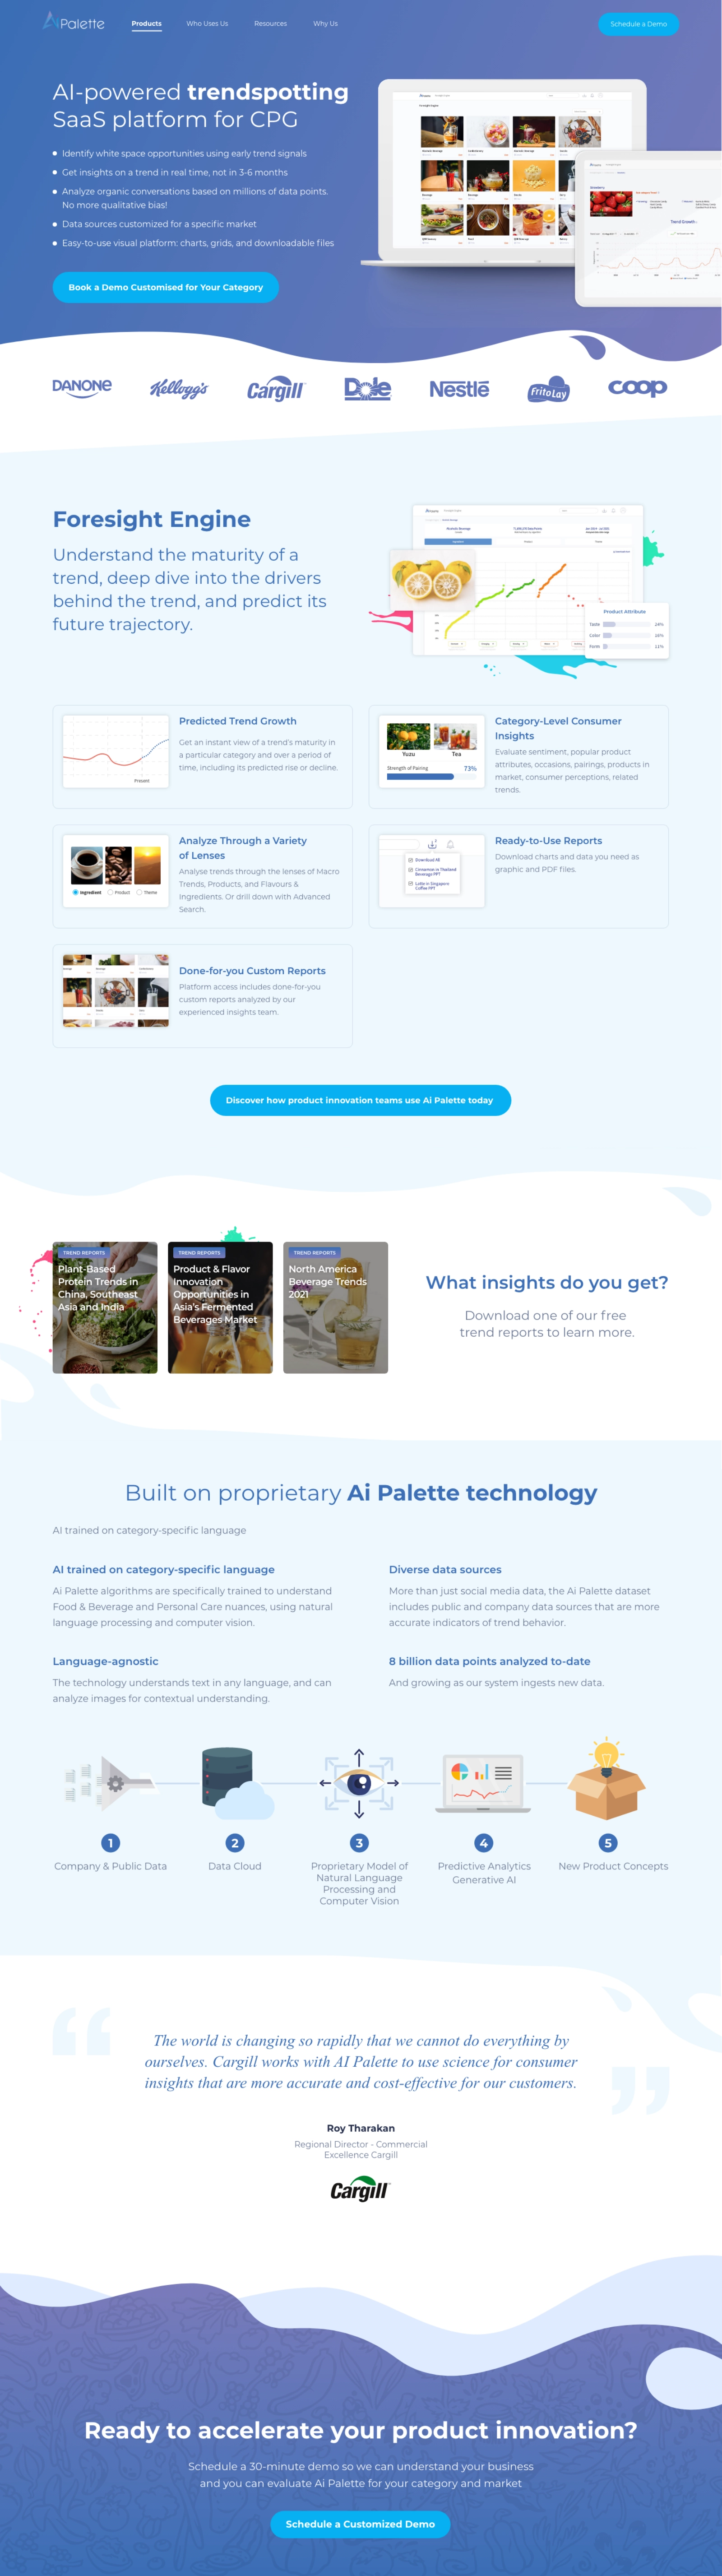 AI Palette - Website Product page